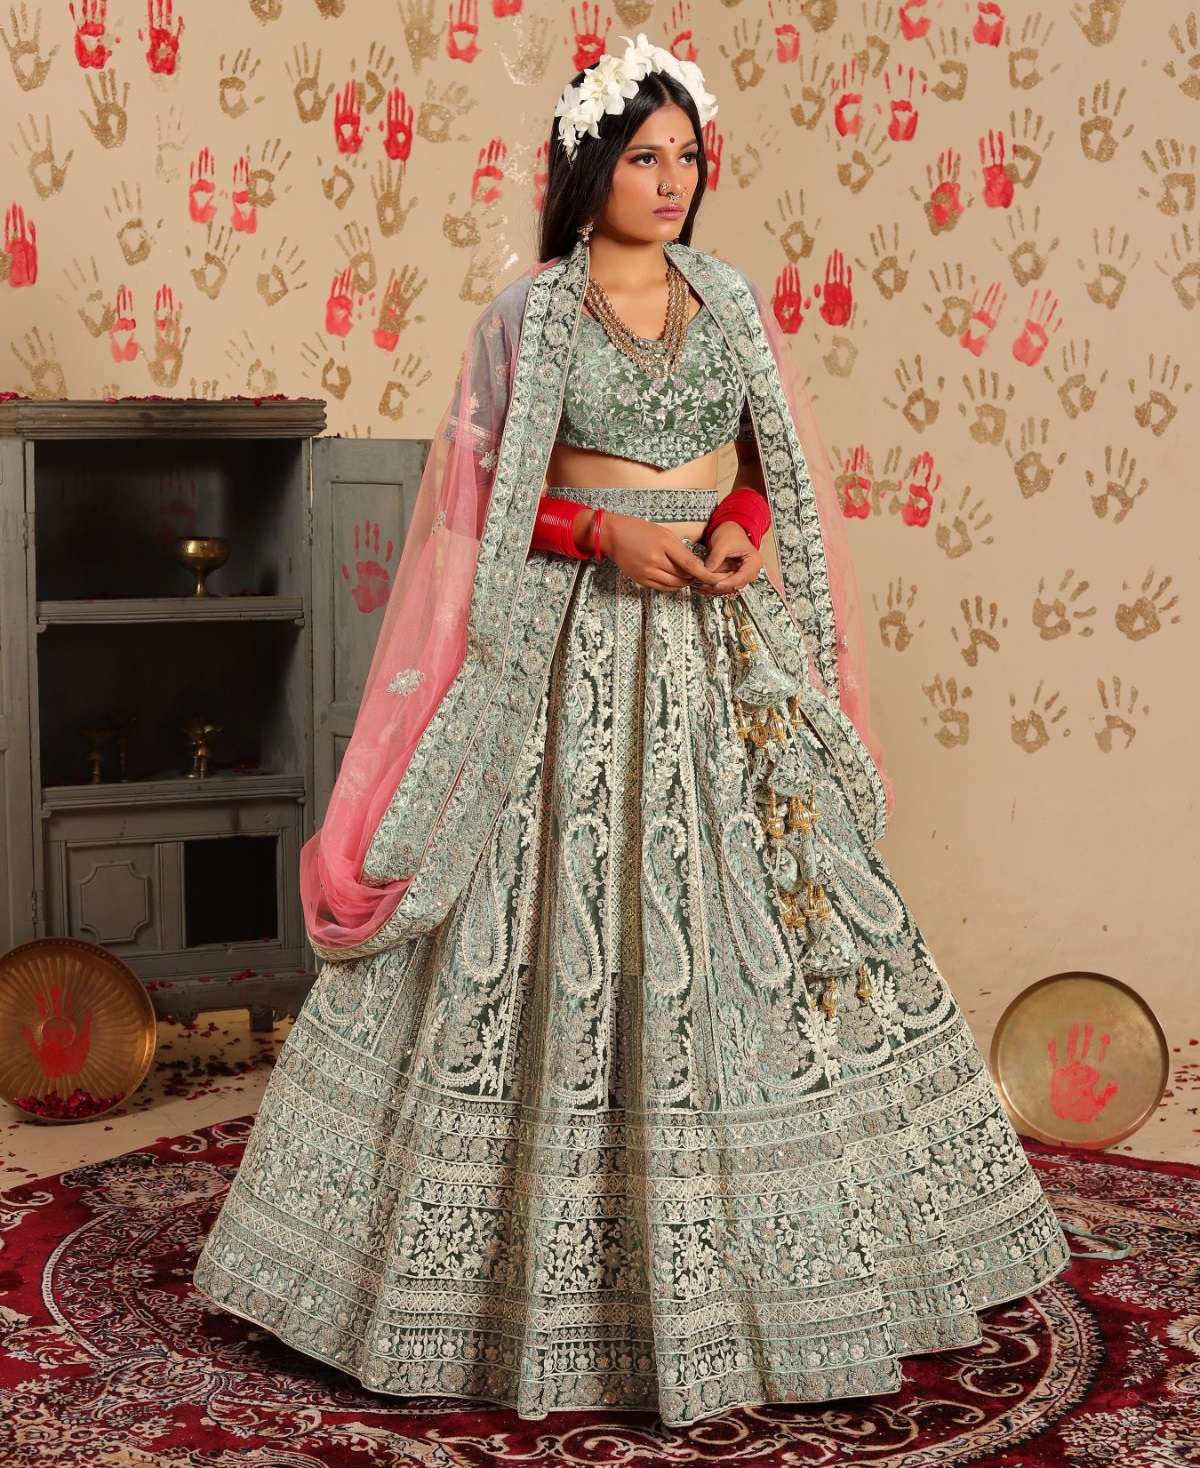 Bridal Wear Wedding Exclusive Light Pink Lehenga at Rs 25999 in Surat